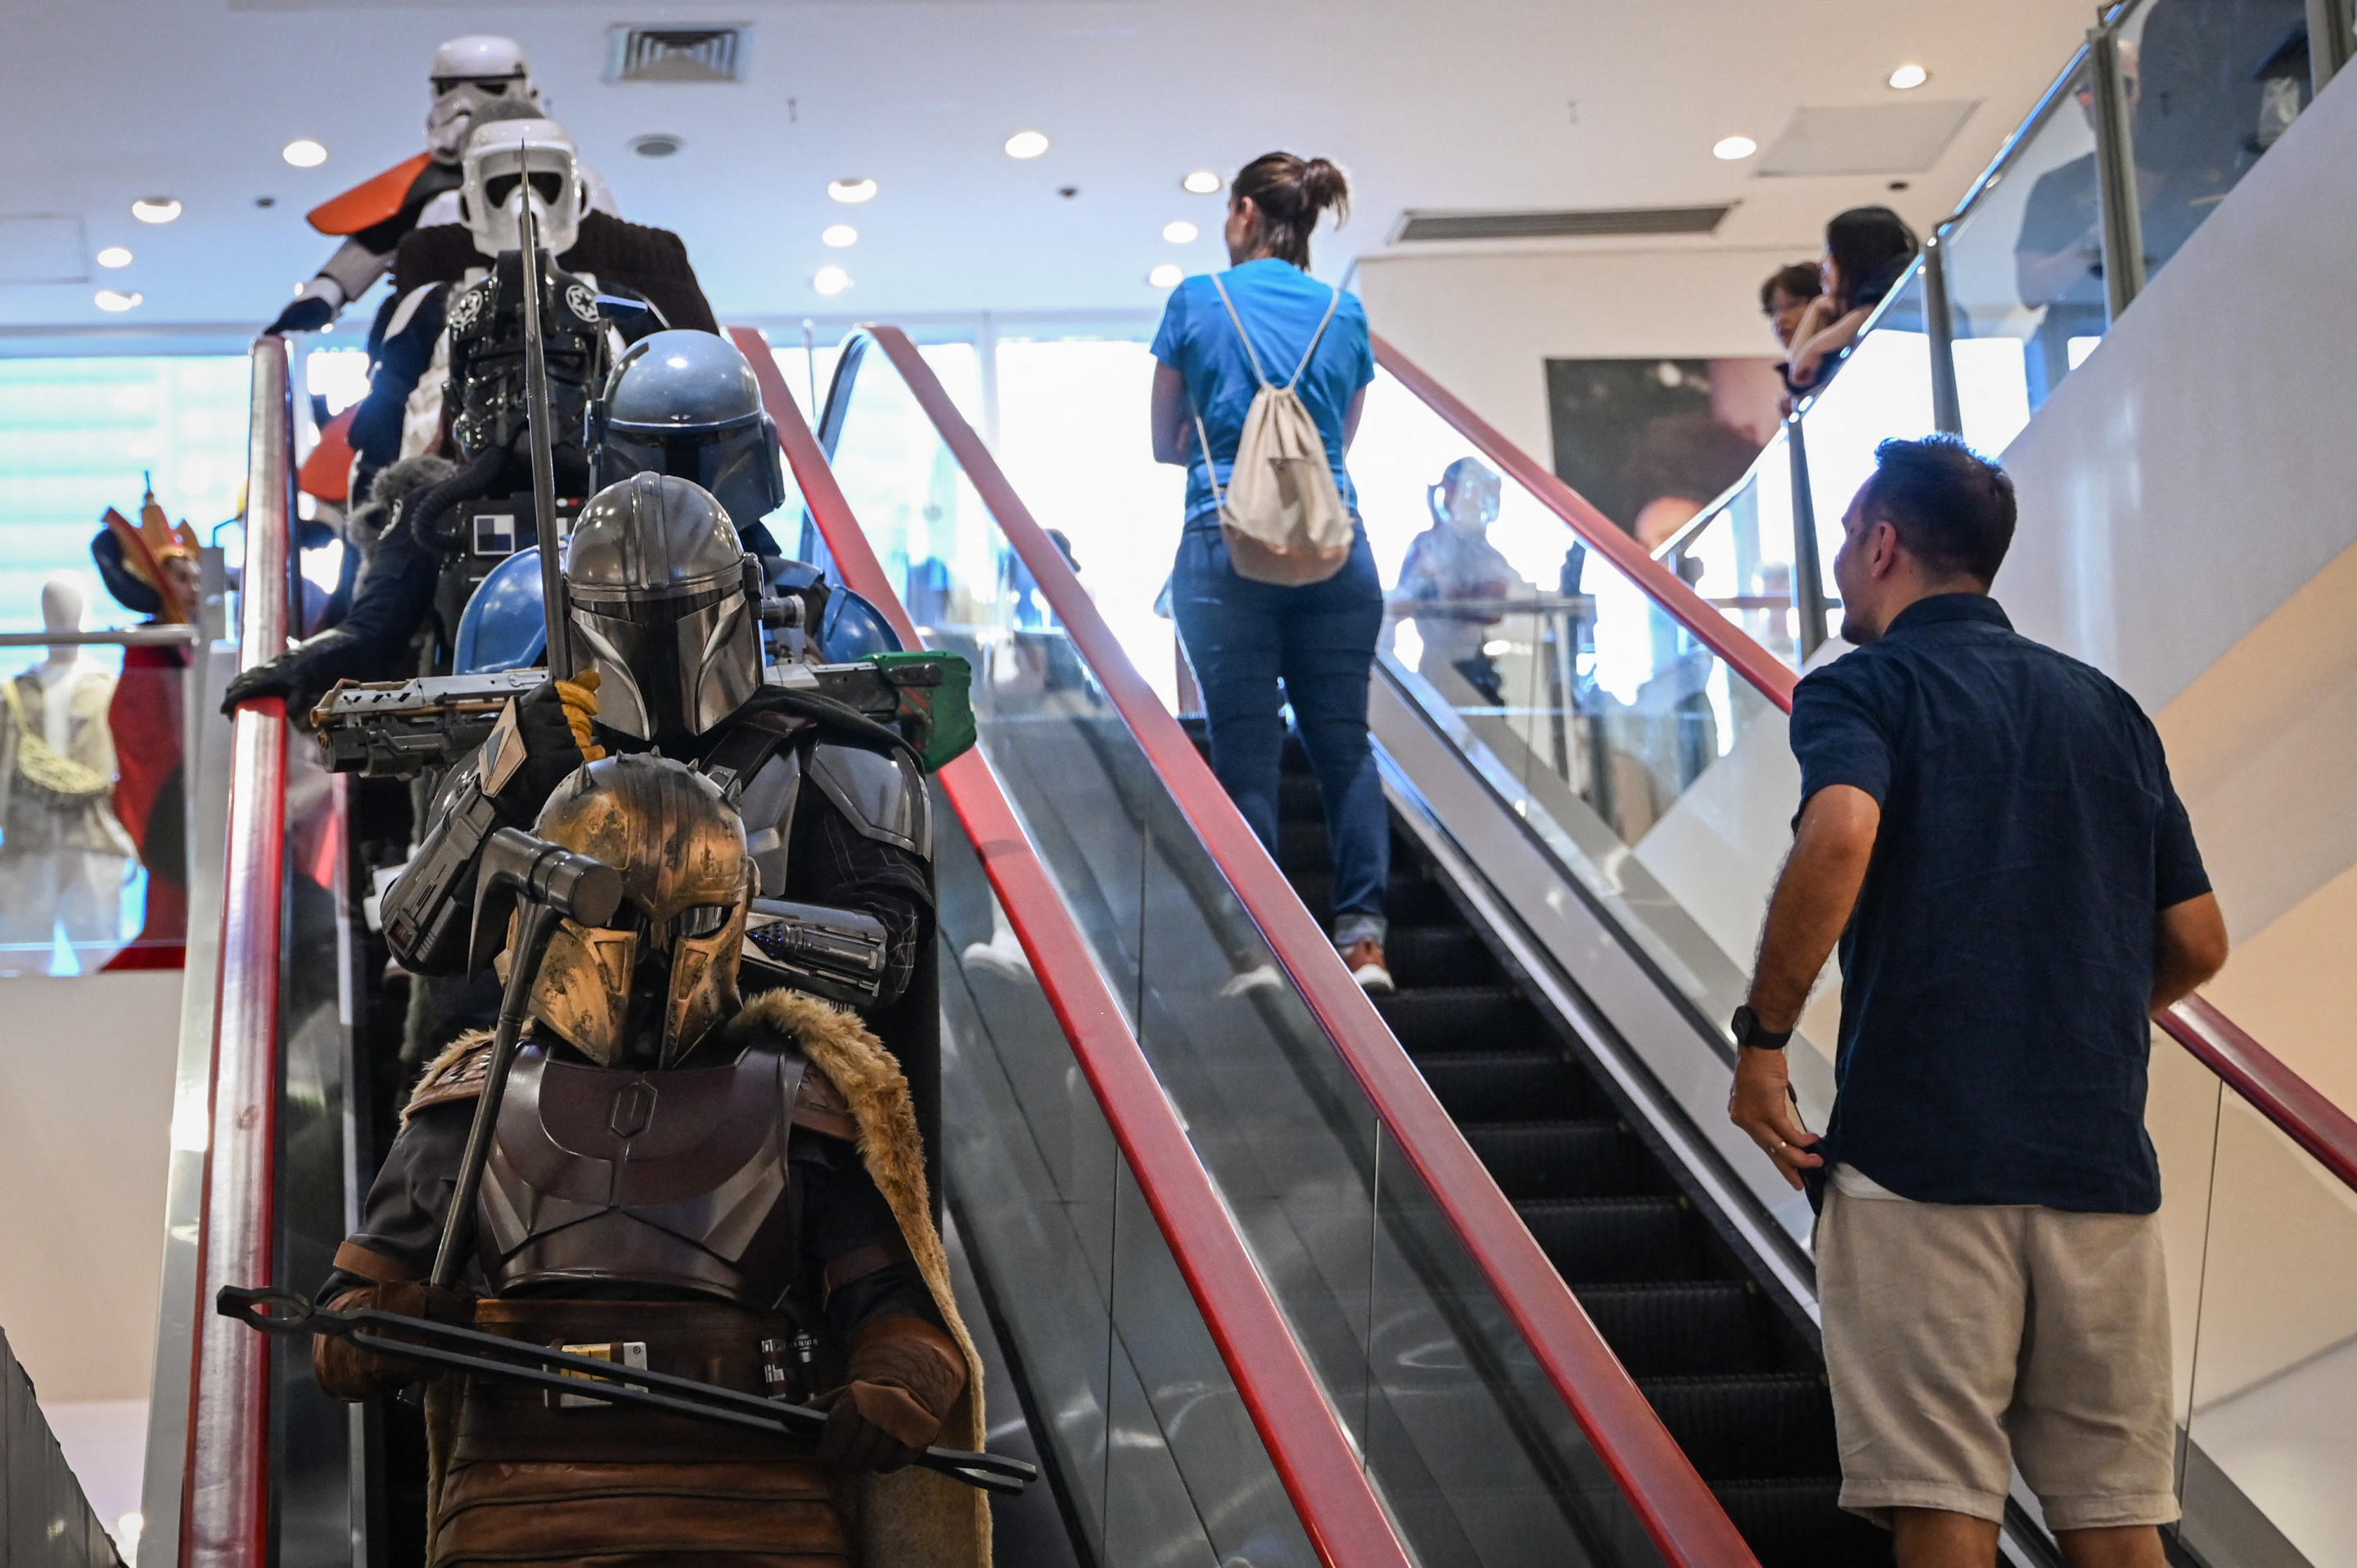 Costumed fans celebrating Star Wars Day ride an escalator in Manila. 